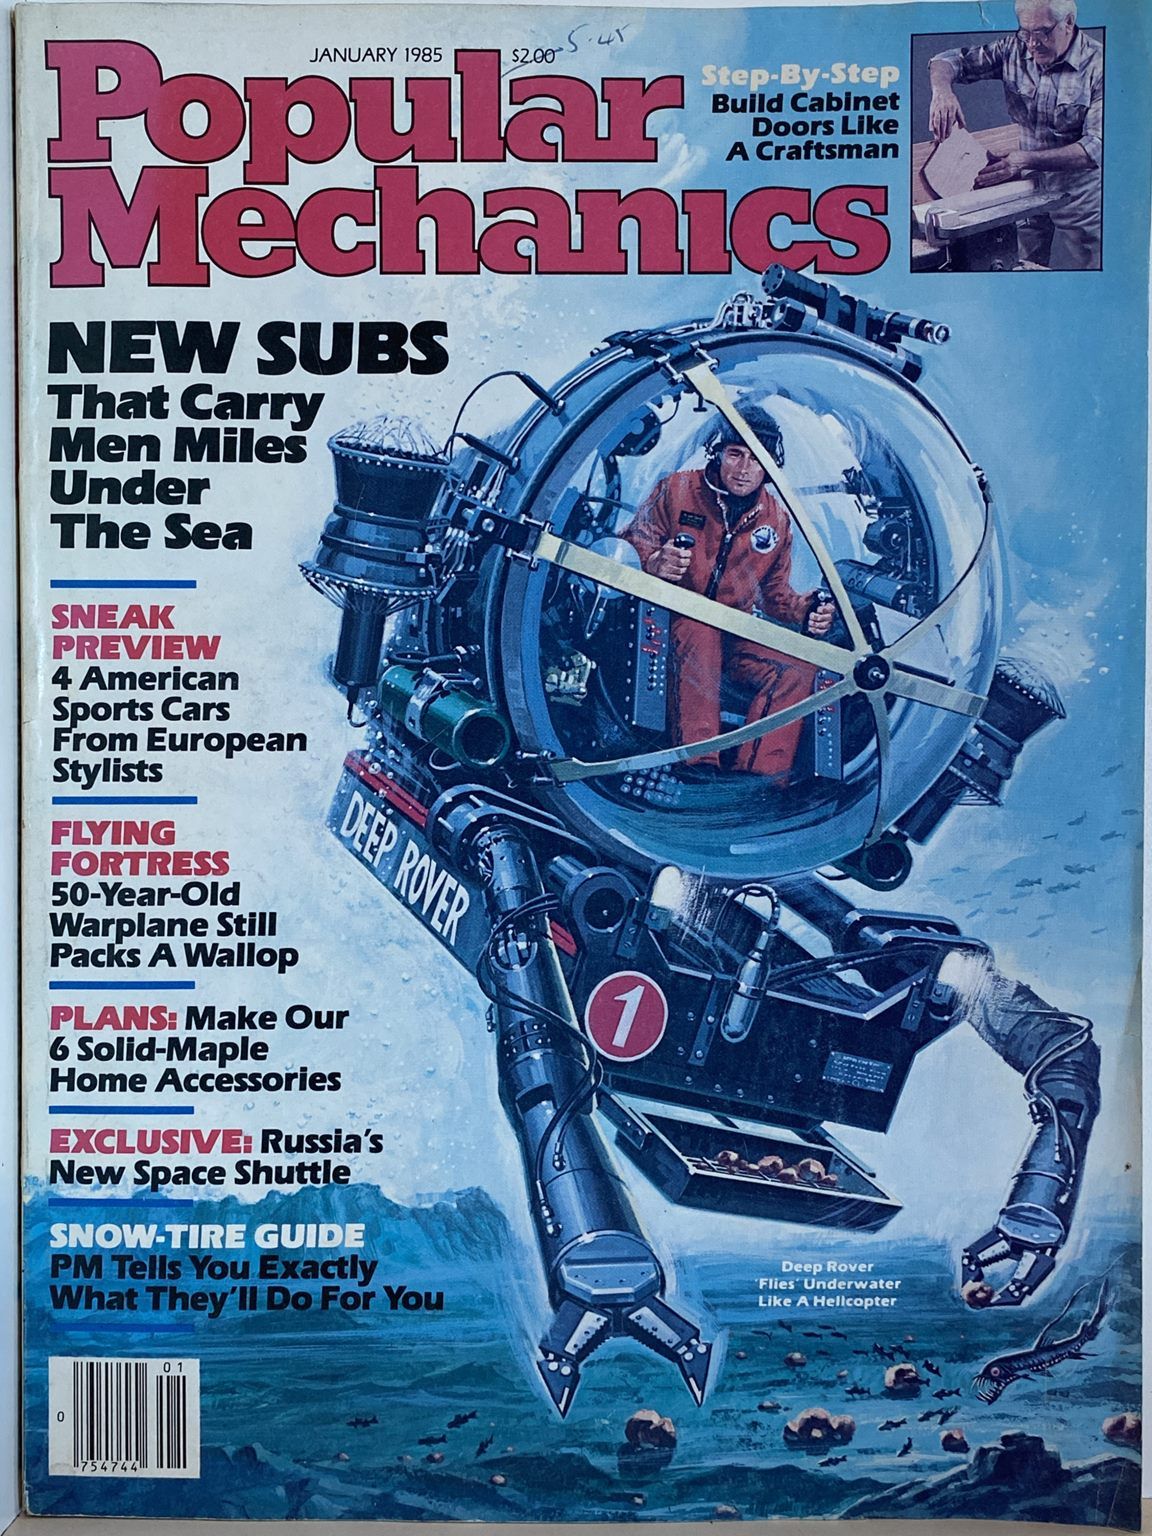 VINTAGE MAGAZINE: Popular Mechanics - Vol. 162, No. 1 - January 1985